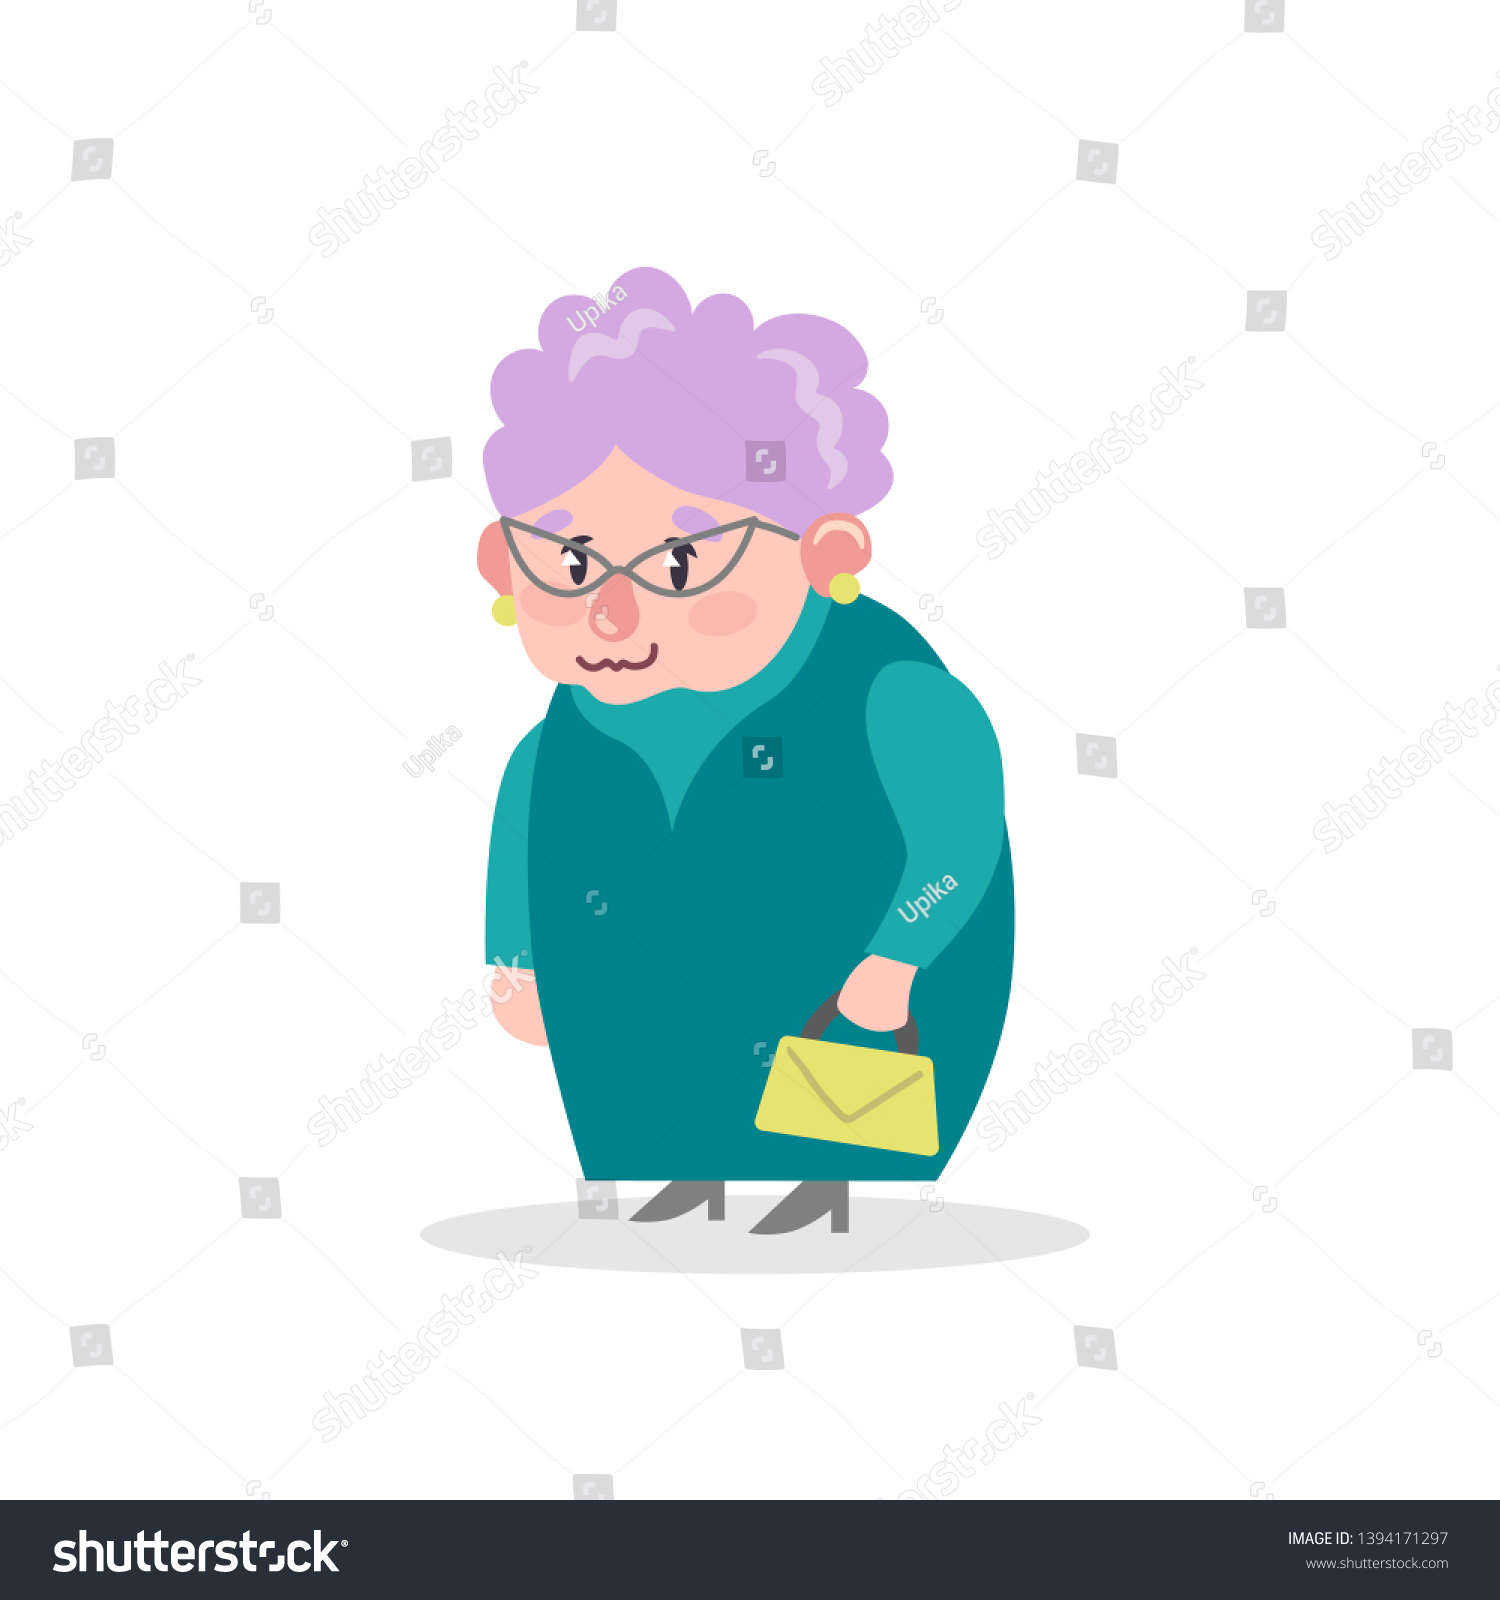 stock-vector-grandma-with-purple-hair-vector-illustration-grandmother-1394171297.jpg